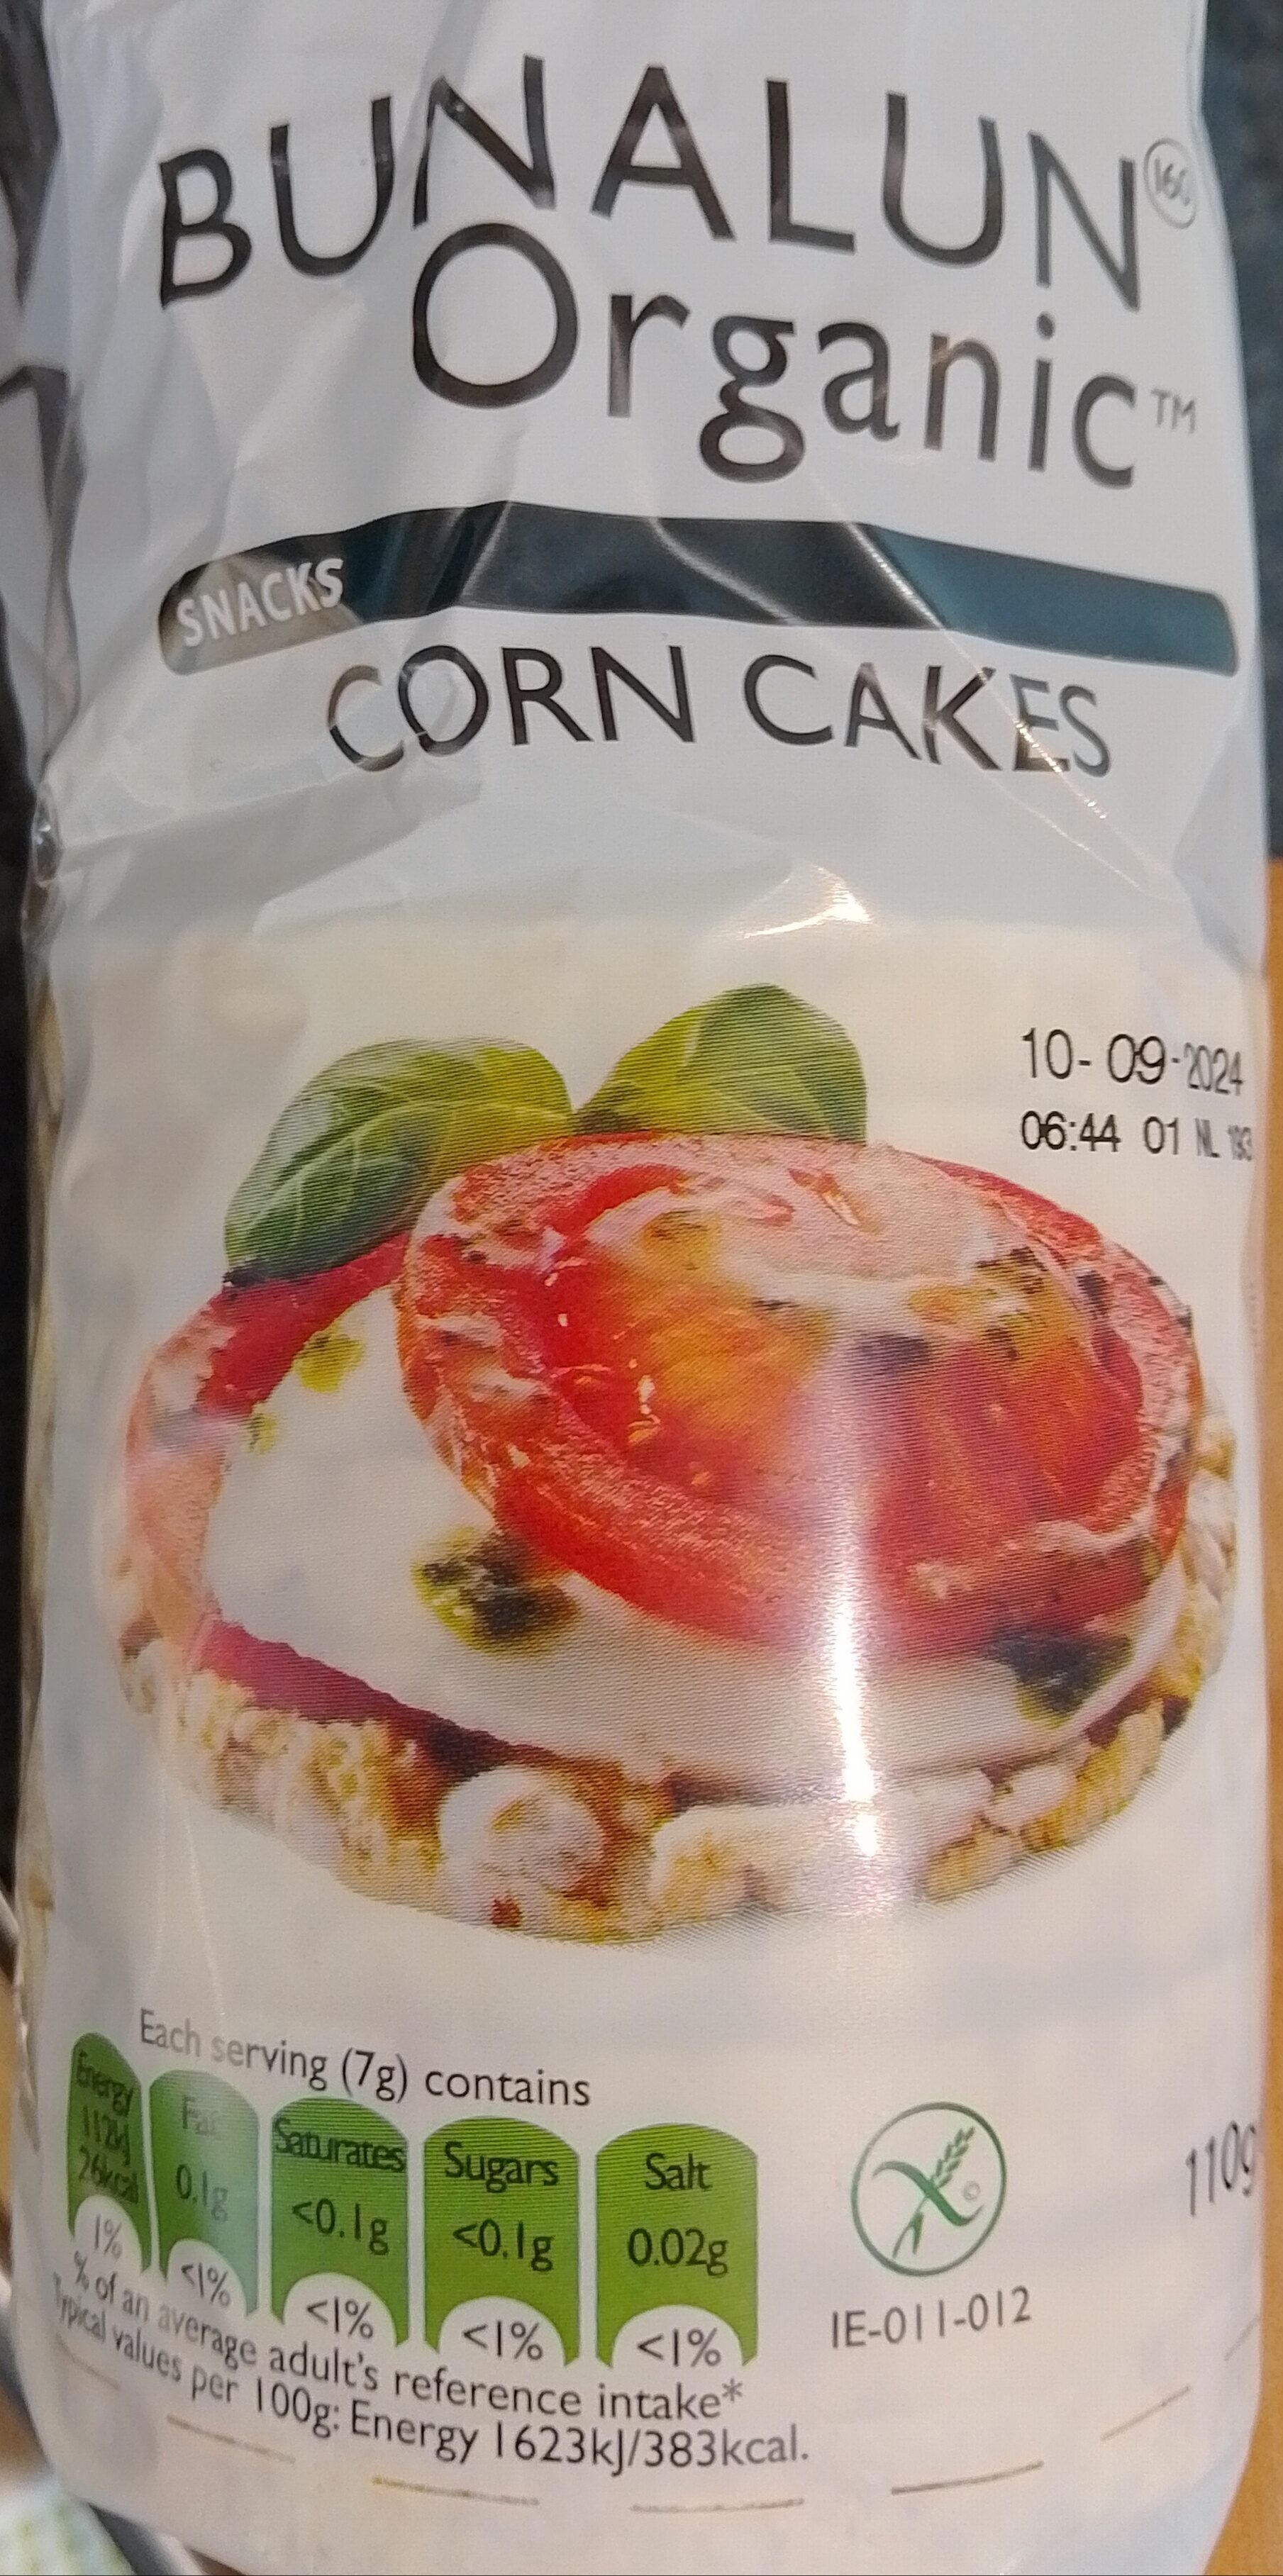 Bunalun Organic Snacks Corn Cakes - Product